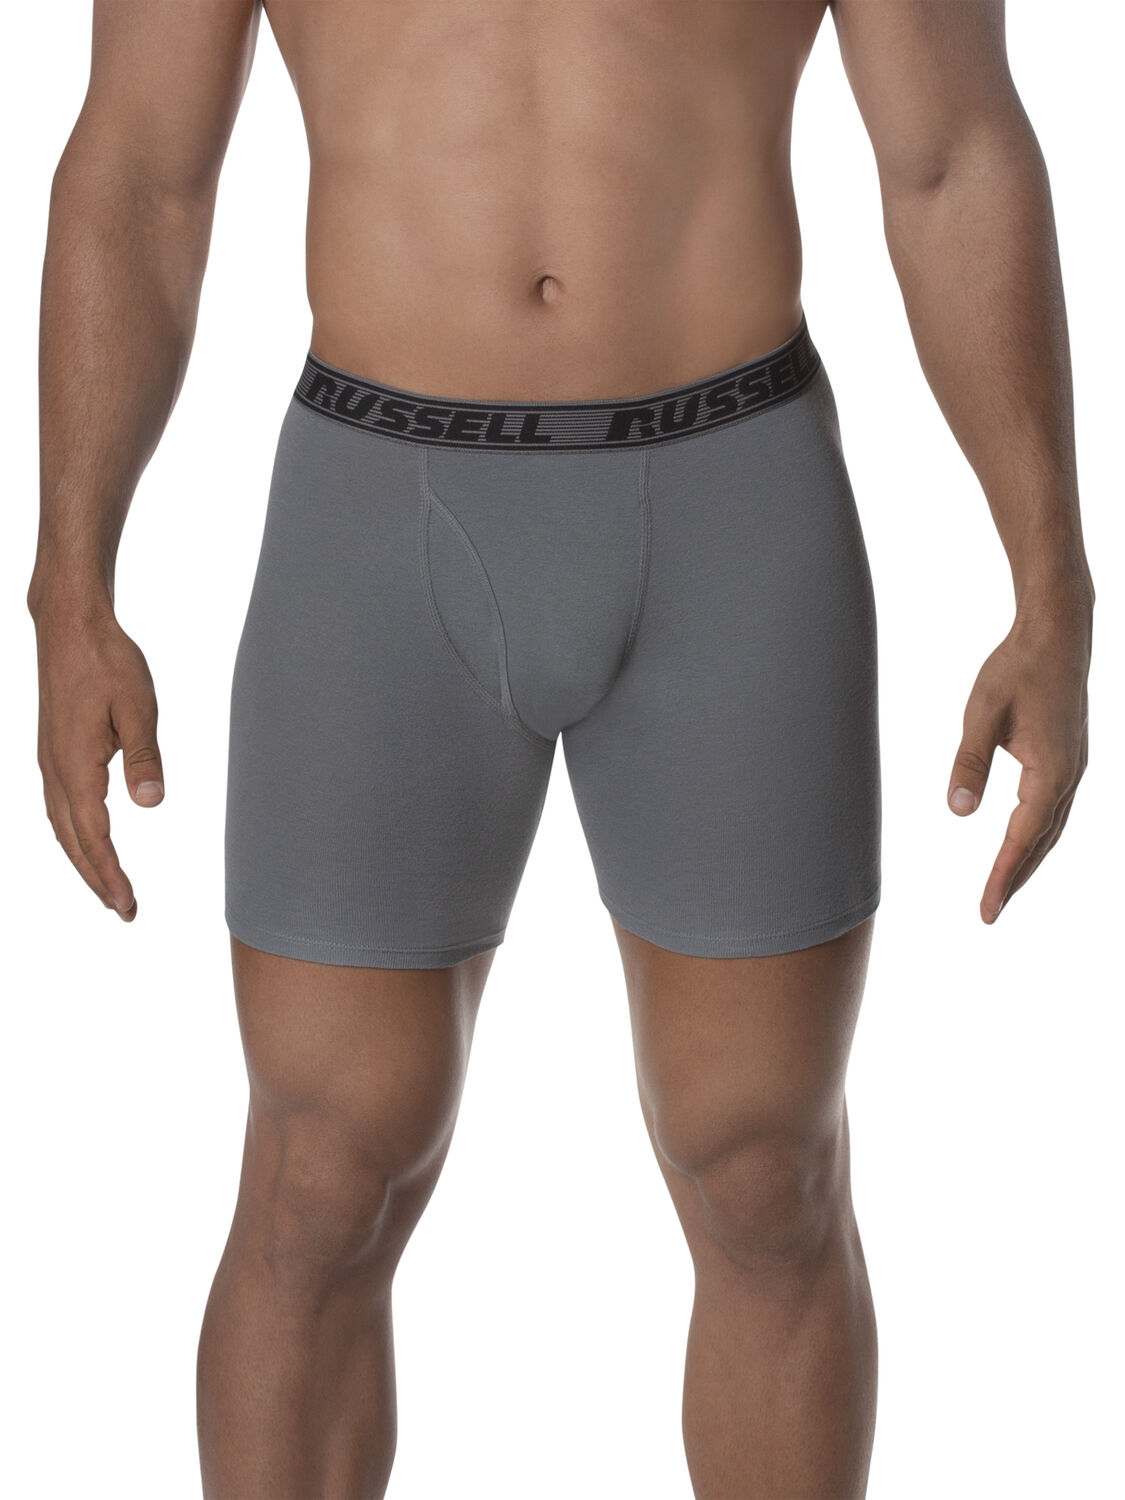 Mua Russell Athletic Men's Performance Mesh Boxer Brief Underwear